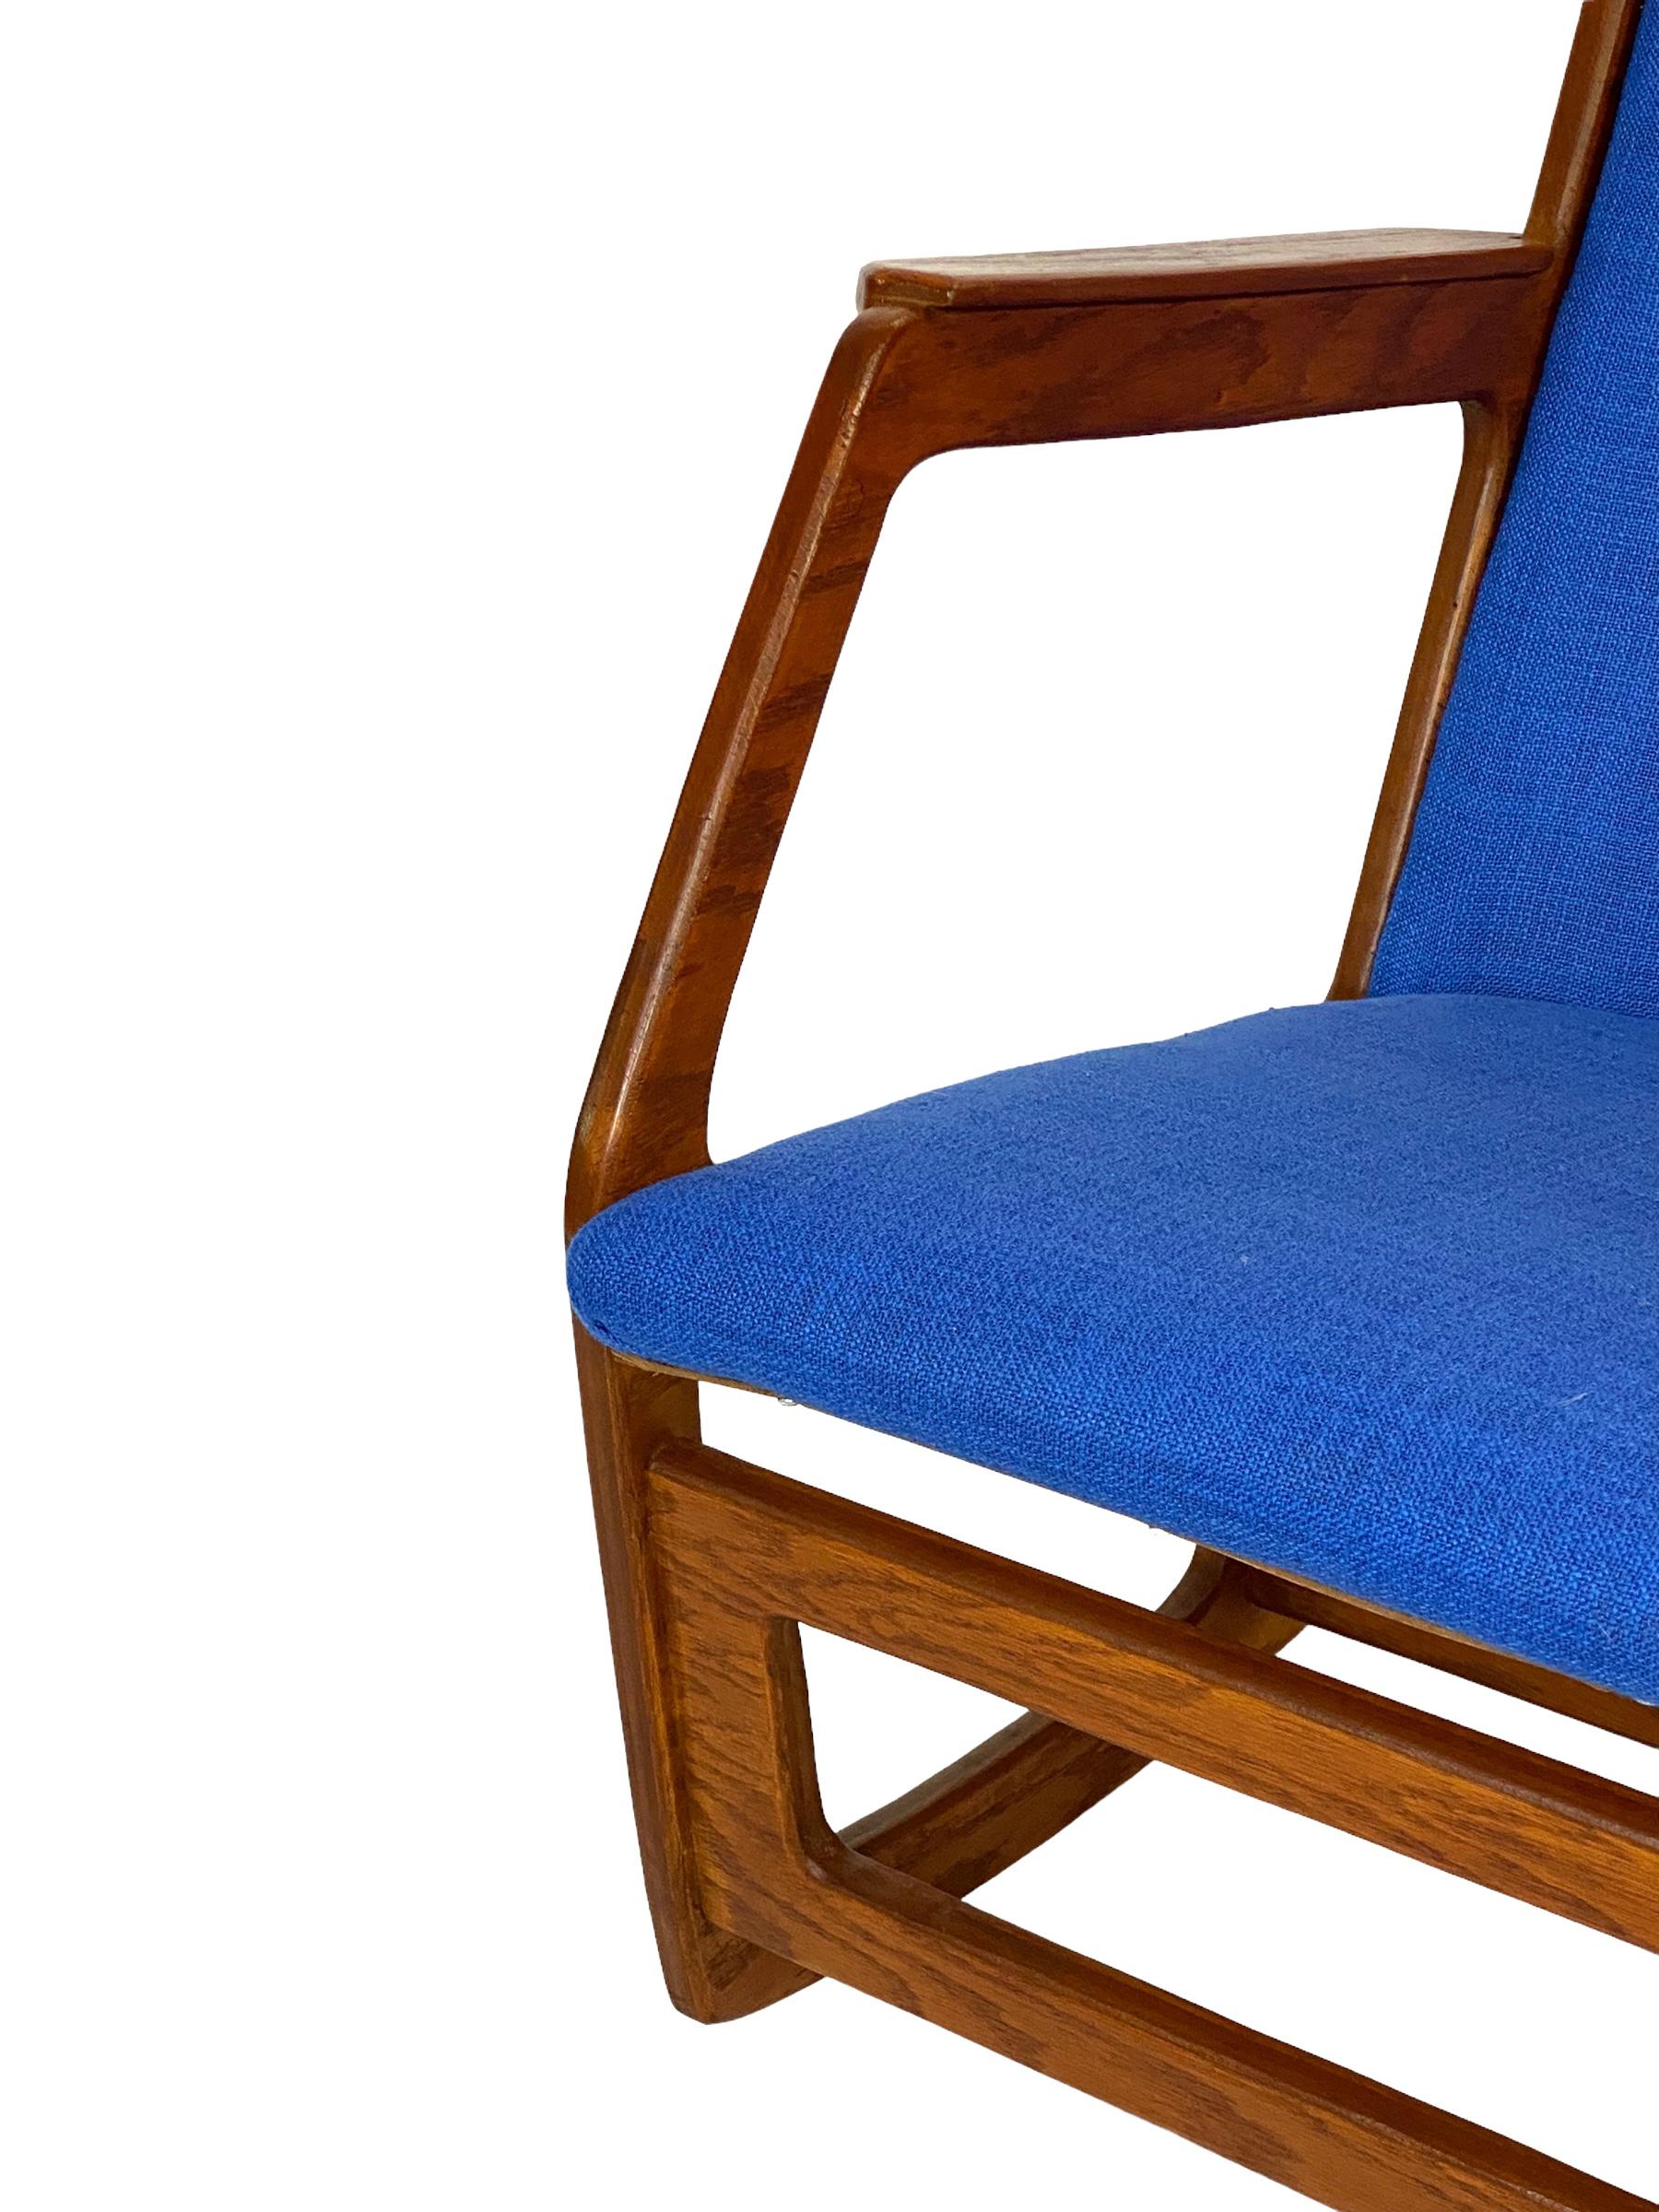 Scandinavian Modern Danish Modern Rocking Chair Attributed to Georg Jensen For Sale